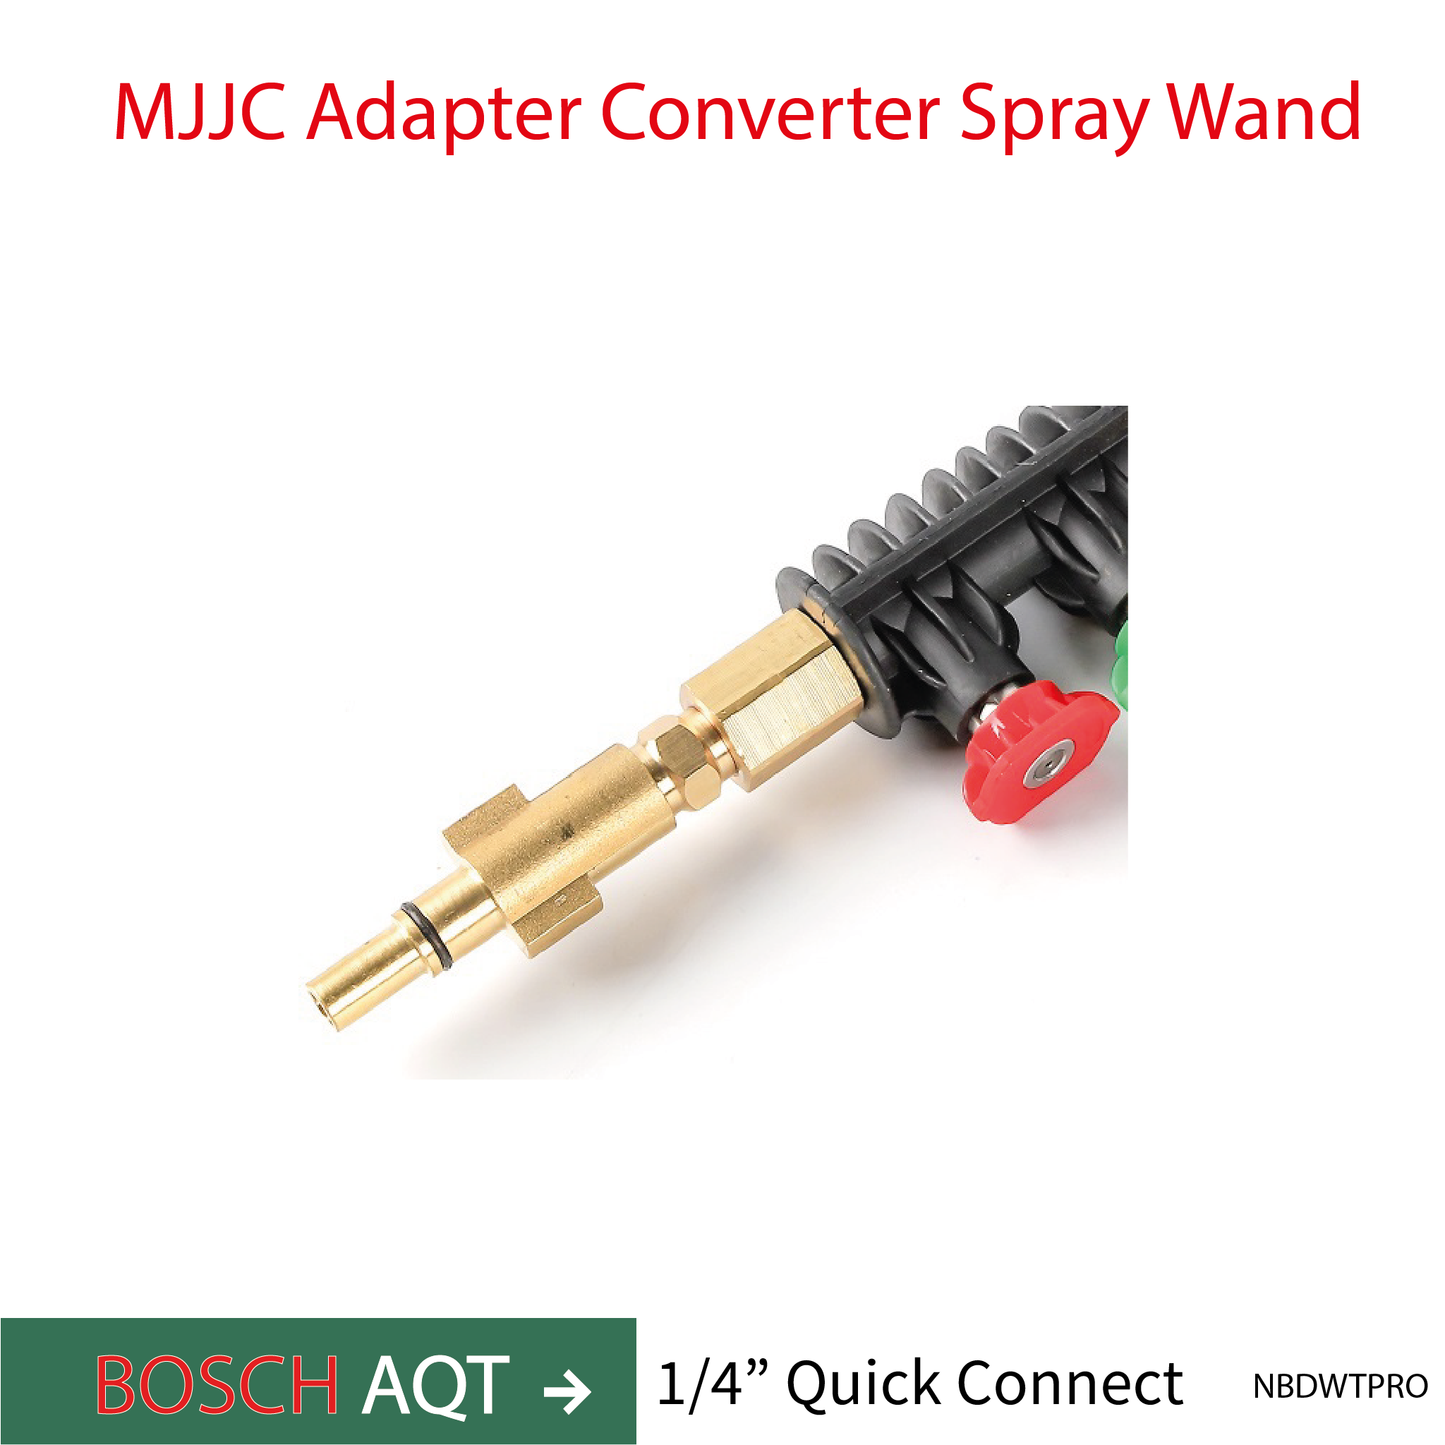 Bosch Aquatak AQT MJJC Adapter Conversion Converter pressure washer Spray Wand with 5 spray tips